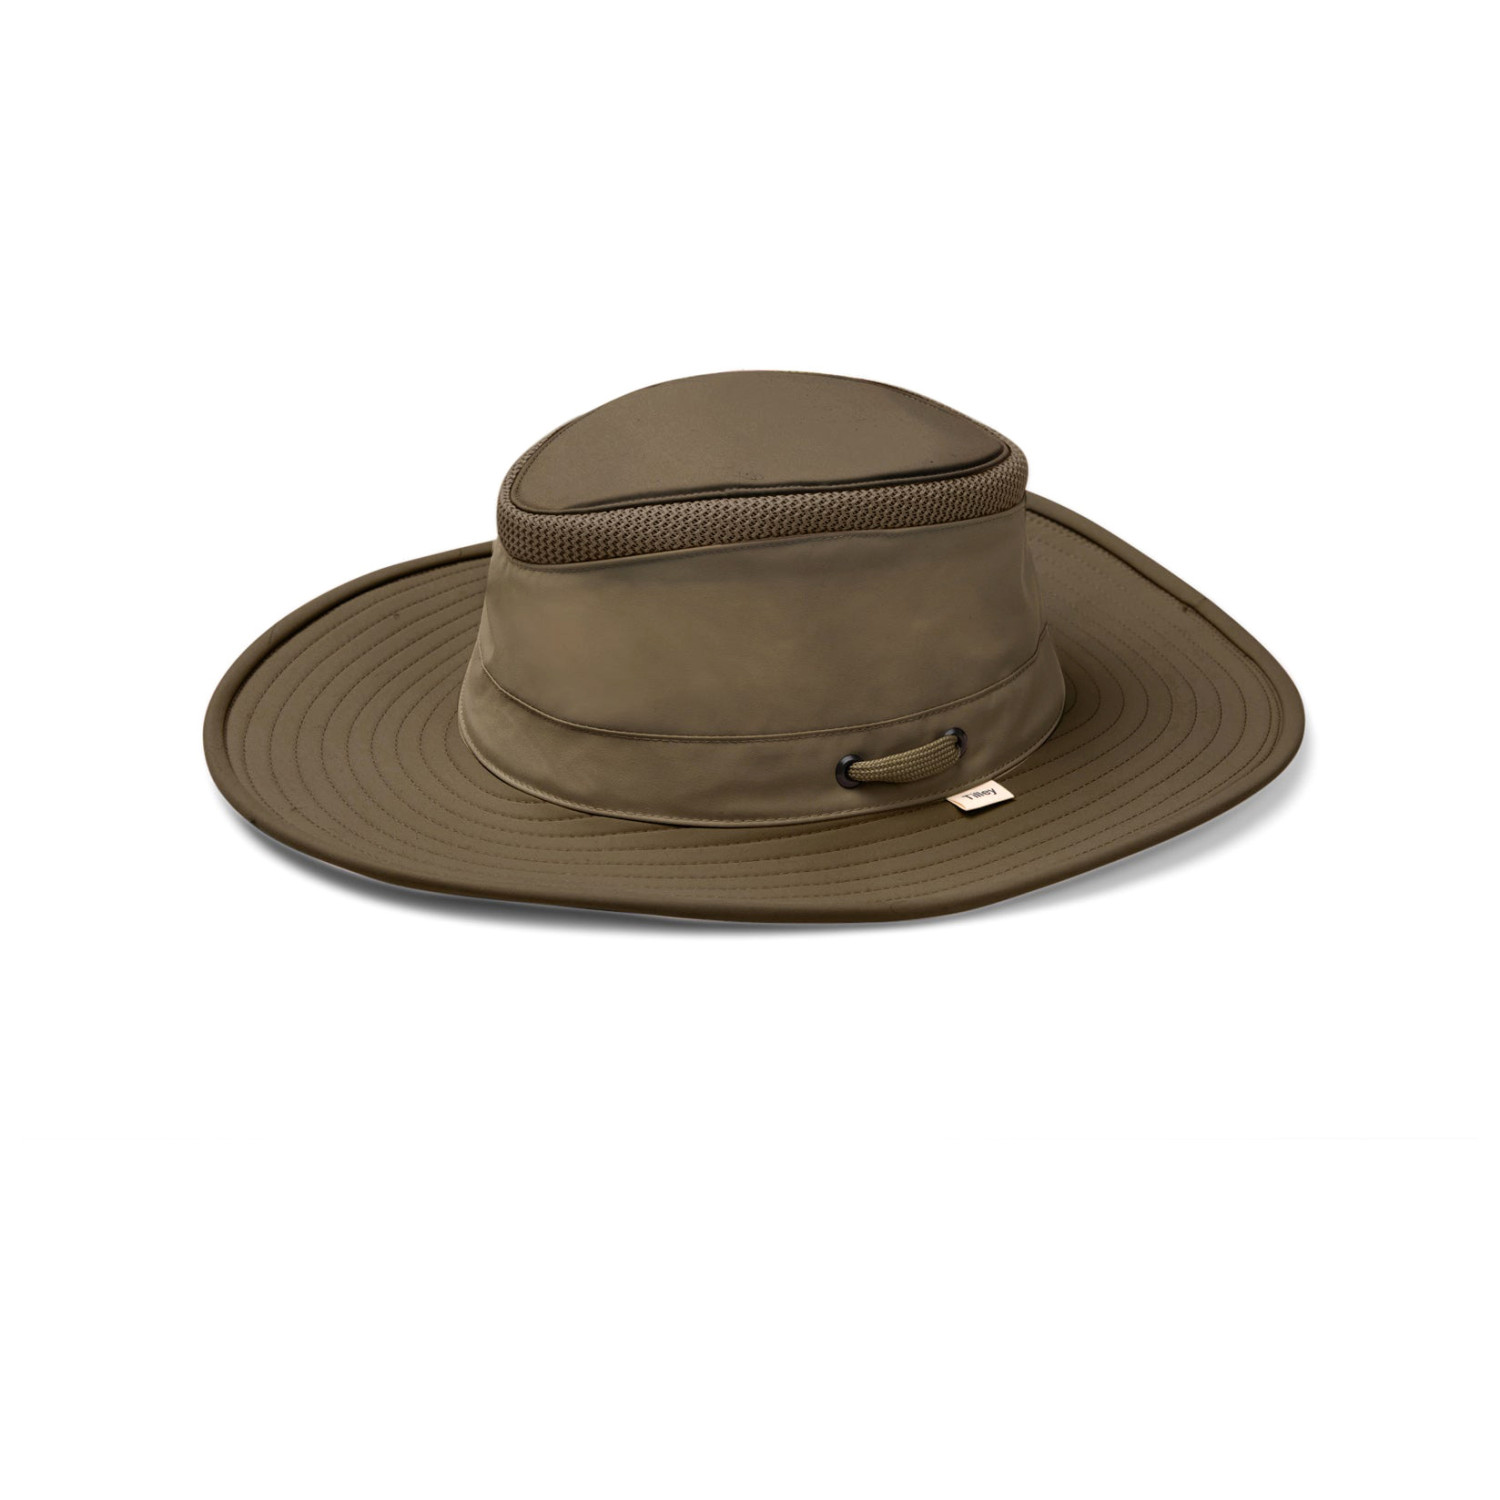 Кепка Tilley Airflo Broad Brim Hat, оливковый летняя вязаная шляпа рыбака с вырезами шляпа от солнца и солнца универсальная летняя шляпа от солнца уличные панамы